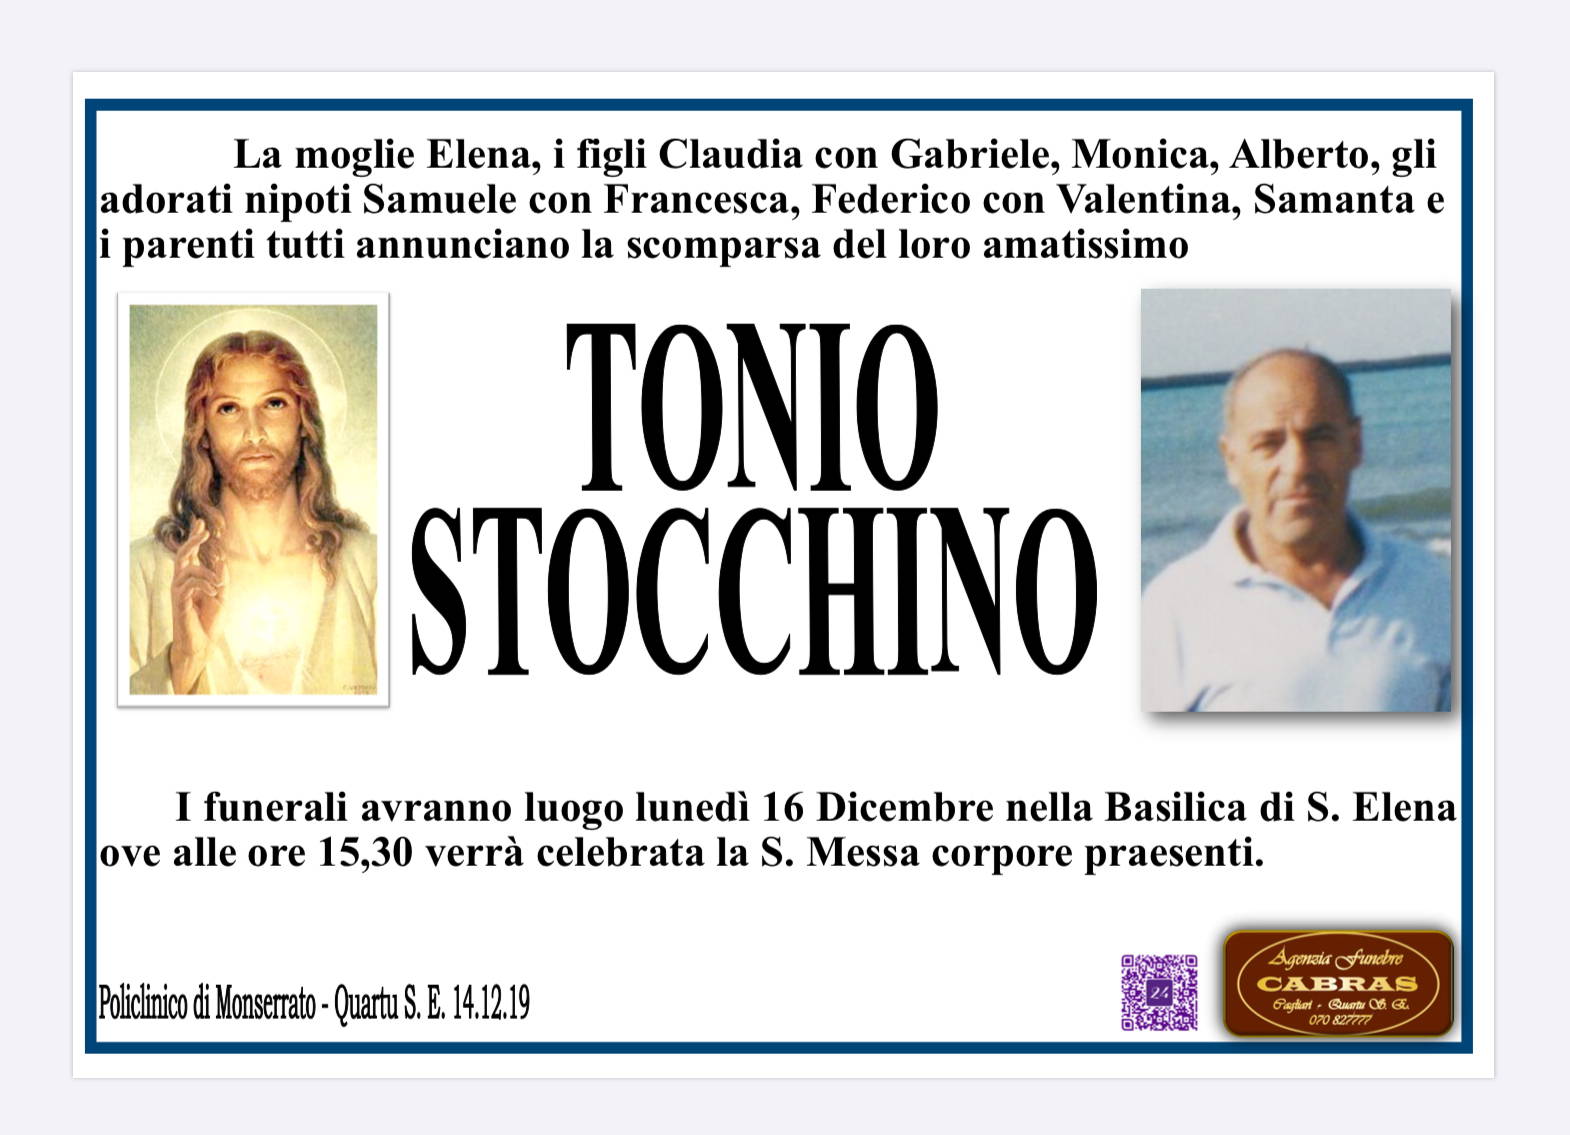 Antonio Stocchino